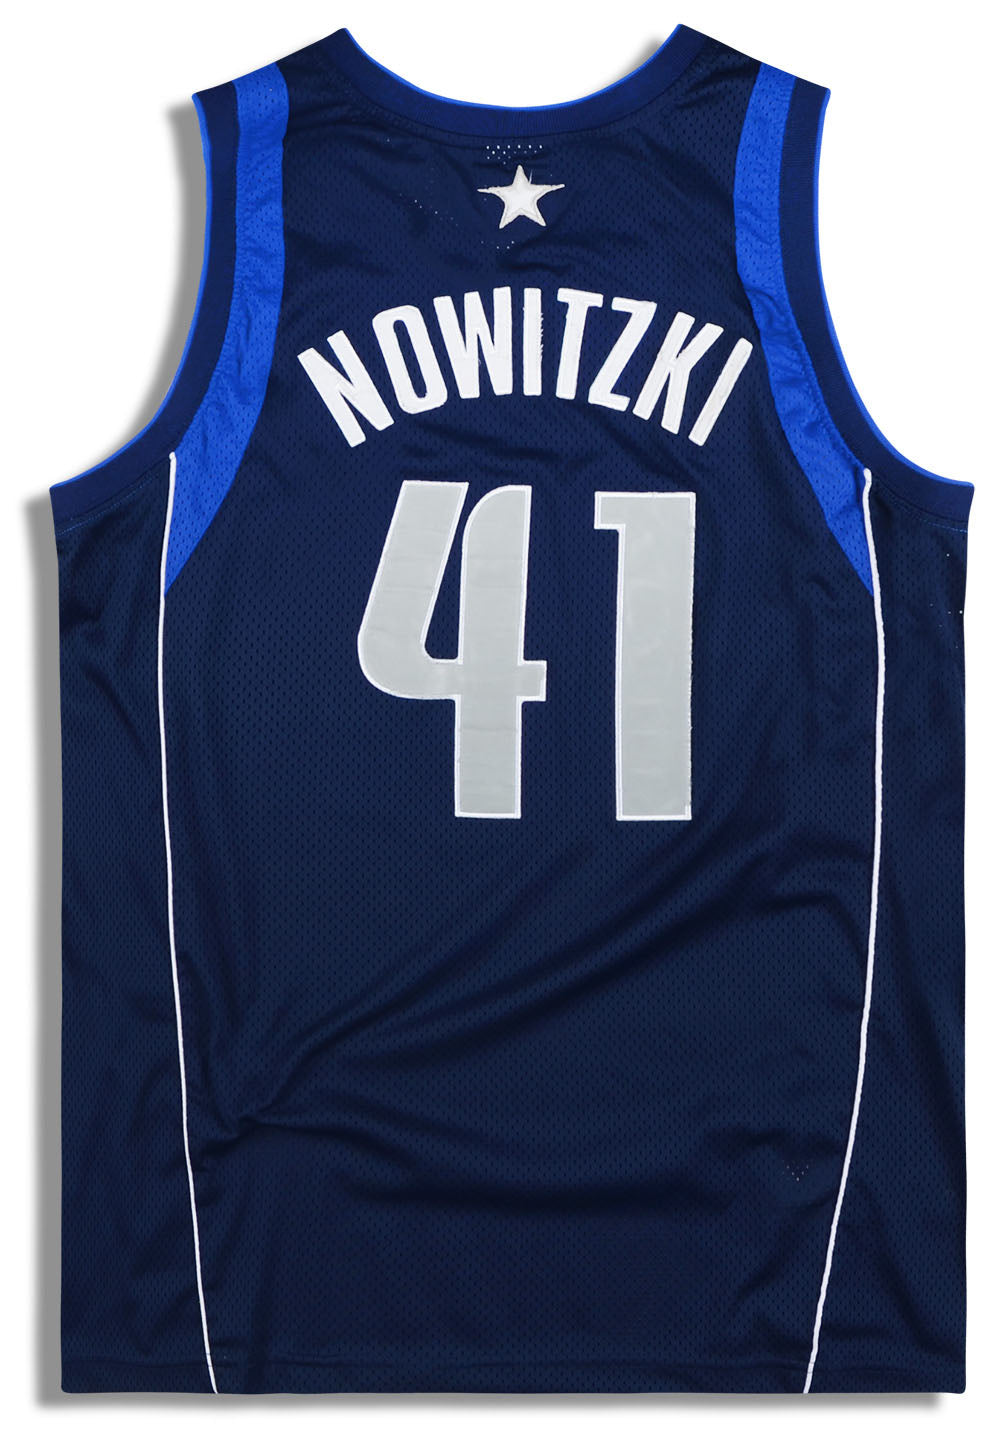 XL) Dirk Nowitzki Dallas Mavericks Basketball Jersey